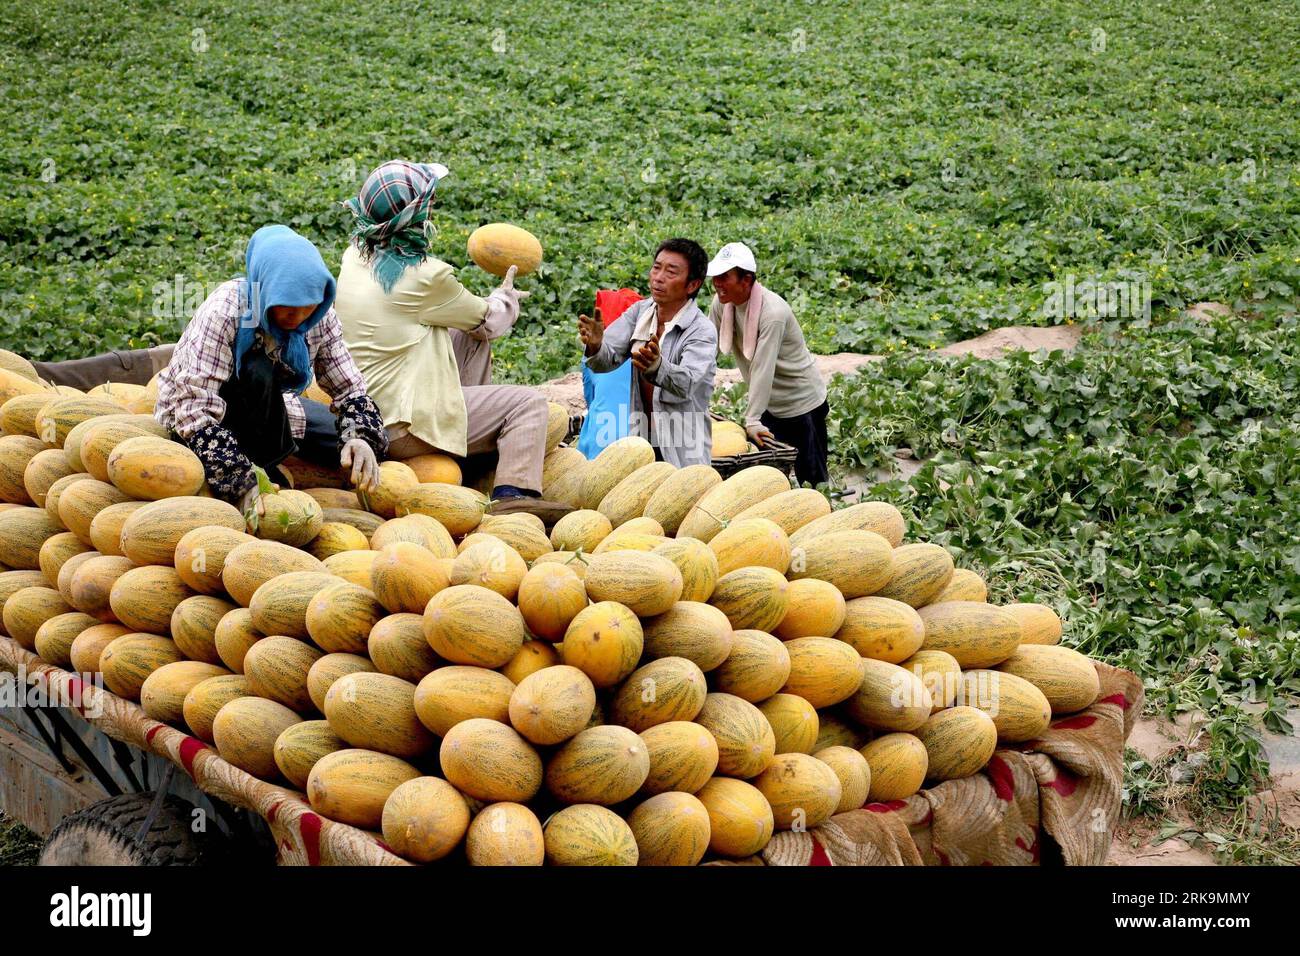 Bildnummer: 54212998  Datum: 06.07.2010  Copyright: imago/Xinhua (100707) -- HAMI, July 7, 2010 (Xinhua) -- Farmers harvest Hami melons, a popular cantaloupe in Xinjiang, at Nanhu Township in Hami, northwest China s Xinjiang Uygur Autonomous Region, July 6, 2010. (Xinhua/Cai Zengle) (wqq) (CN) PUBLICATIONxNOTxINxCHN Gesellschaft Wirtschaft Landwirtschaft Arbeitswelten Bauern Feldarbeit Ernte Land und Leute kbdig xdp 2010 quer o0 Melone Melonen Melonenernte    Bildnummer 54212998 Date 06 07 2010 Copyright Imago XINHUA  Hami July 7 2010 XINHUA Farmers Harvest Hami melons a Popular Cantaloupe in Stock Photo